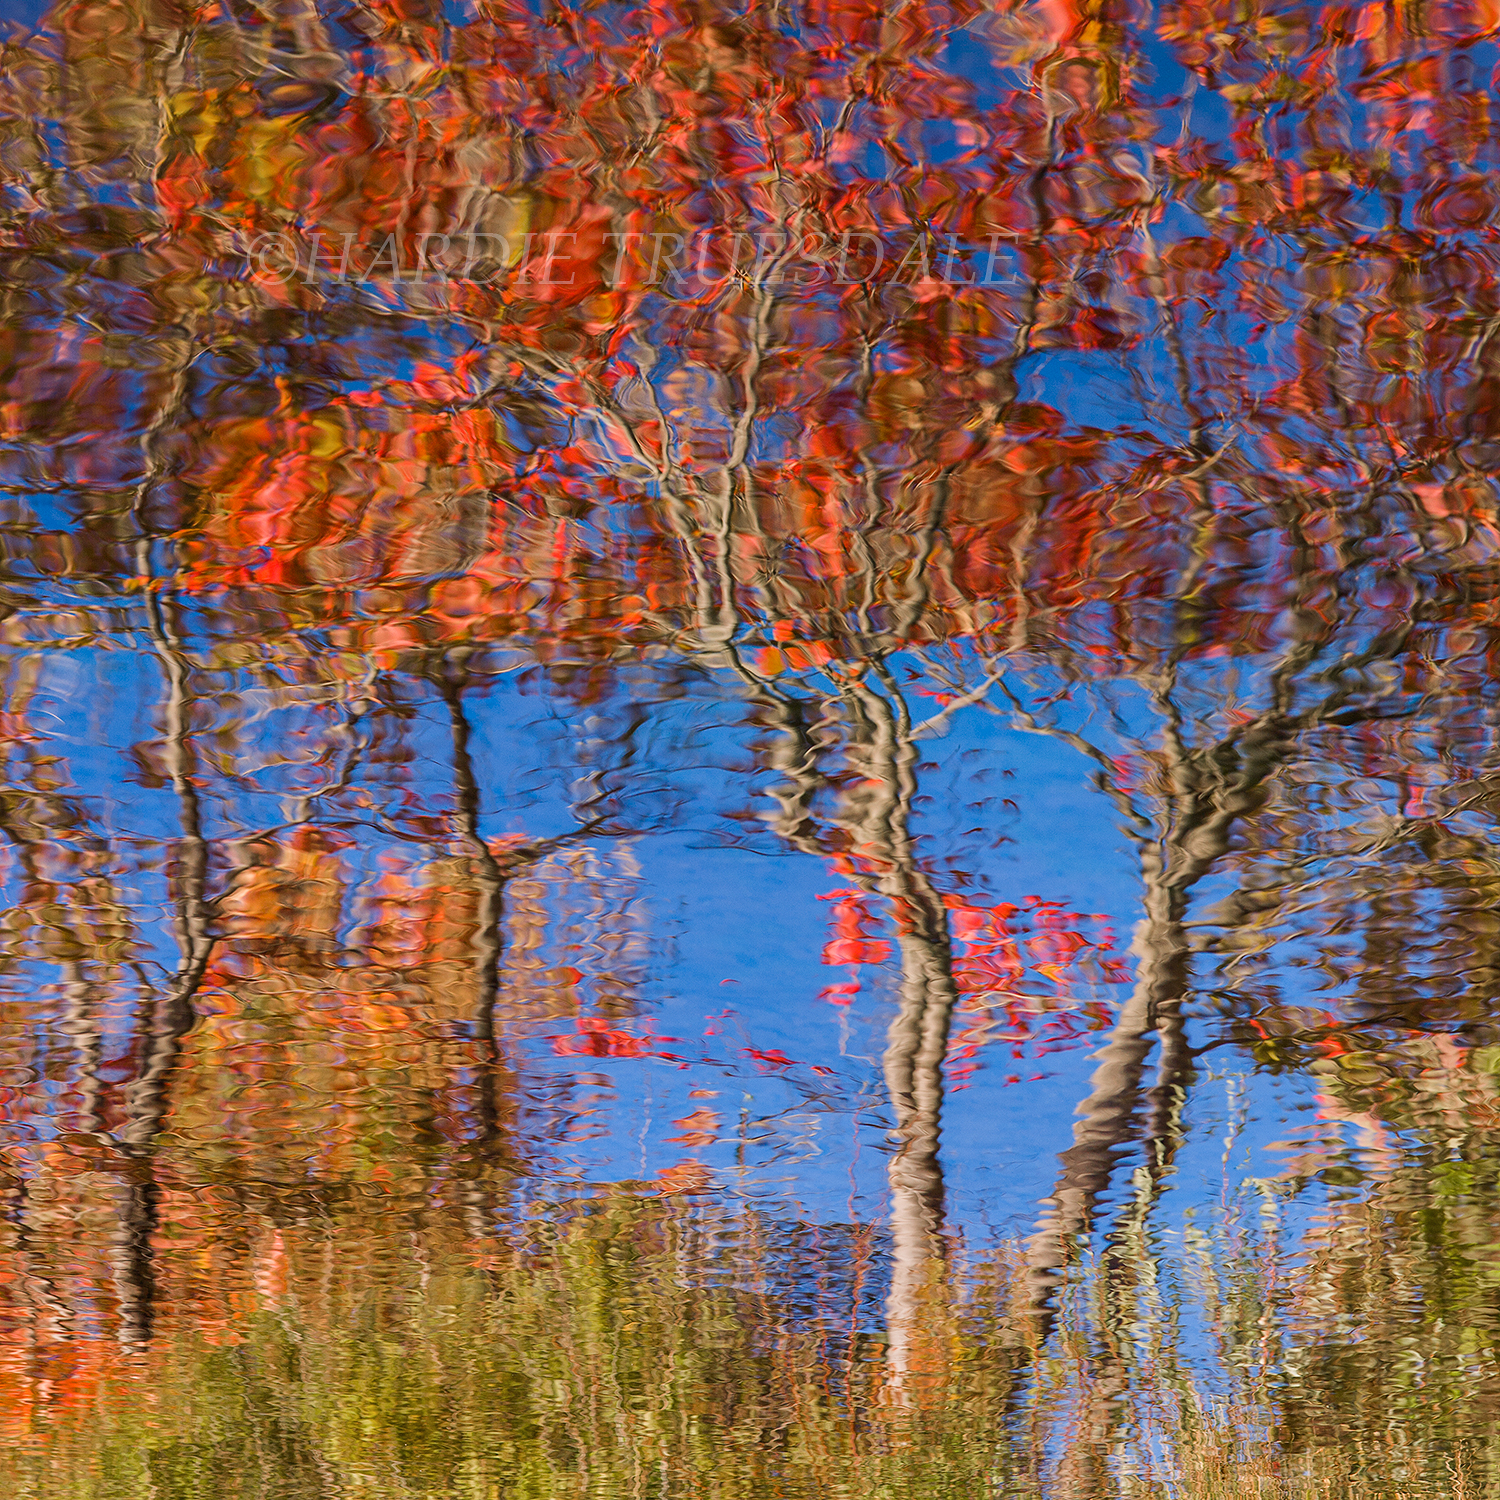  Cks#288 "Fall Trees, North Lake, Catskill Preserve" 